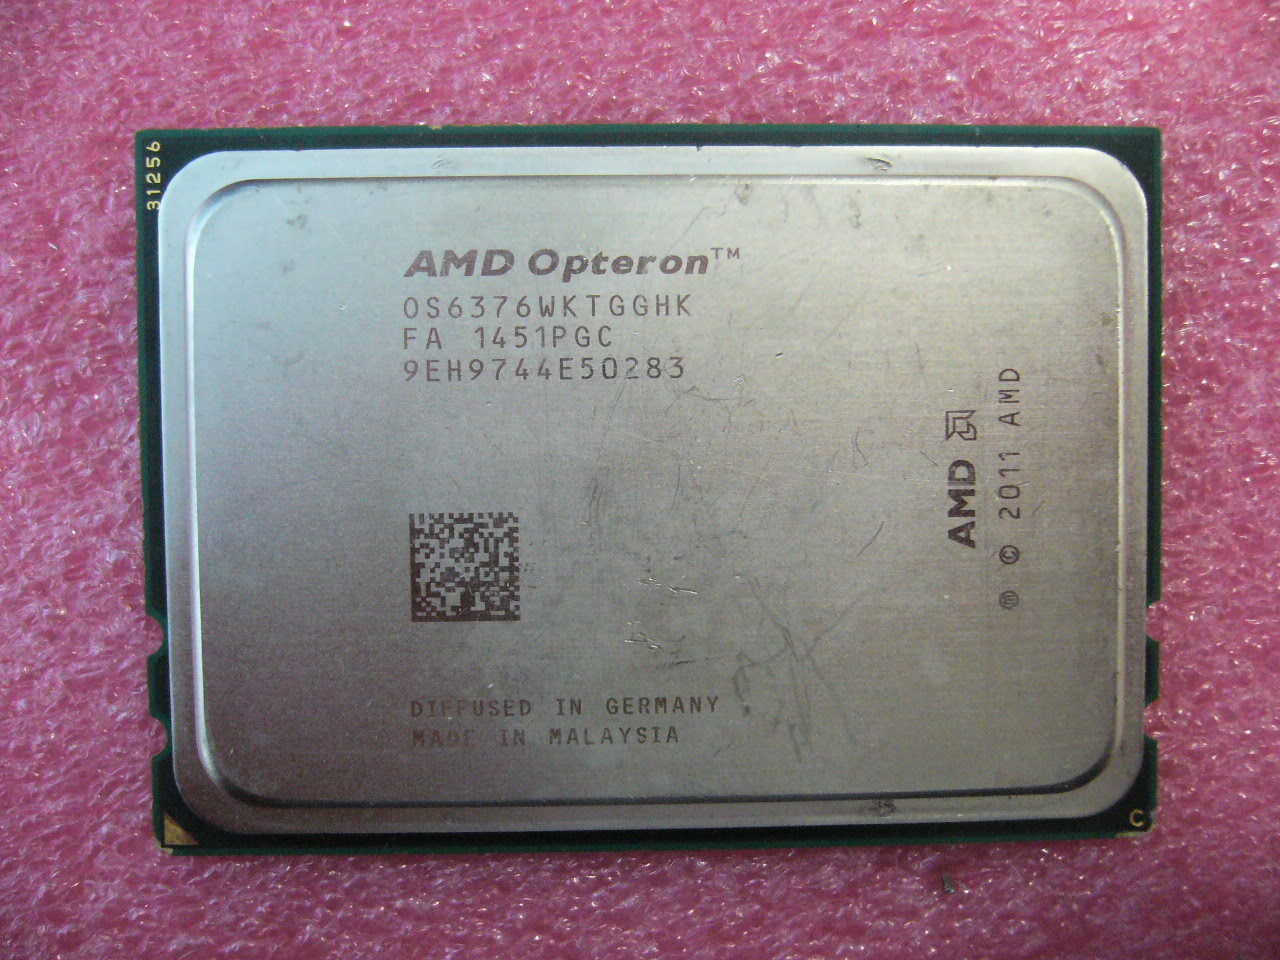 QTY 1x AMD Opteron 6376 2.3GHz Sixteen Core OS6376WKTGGHK CPU Tested G34 broken - $130.00